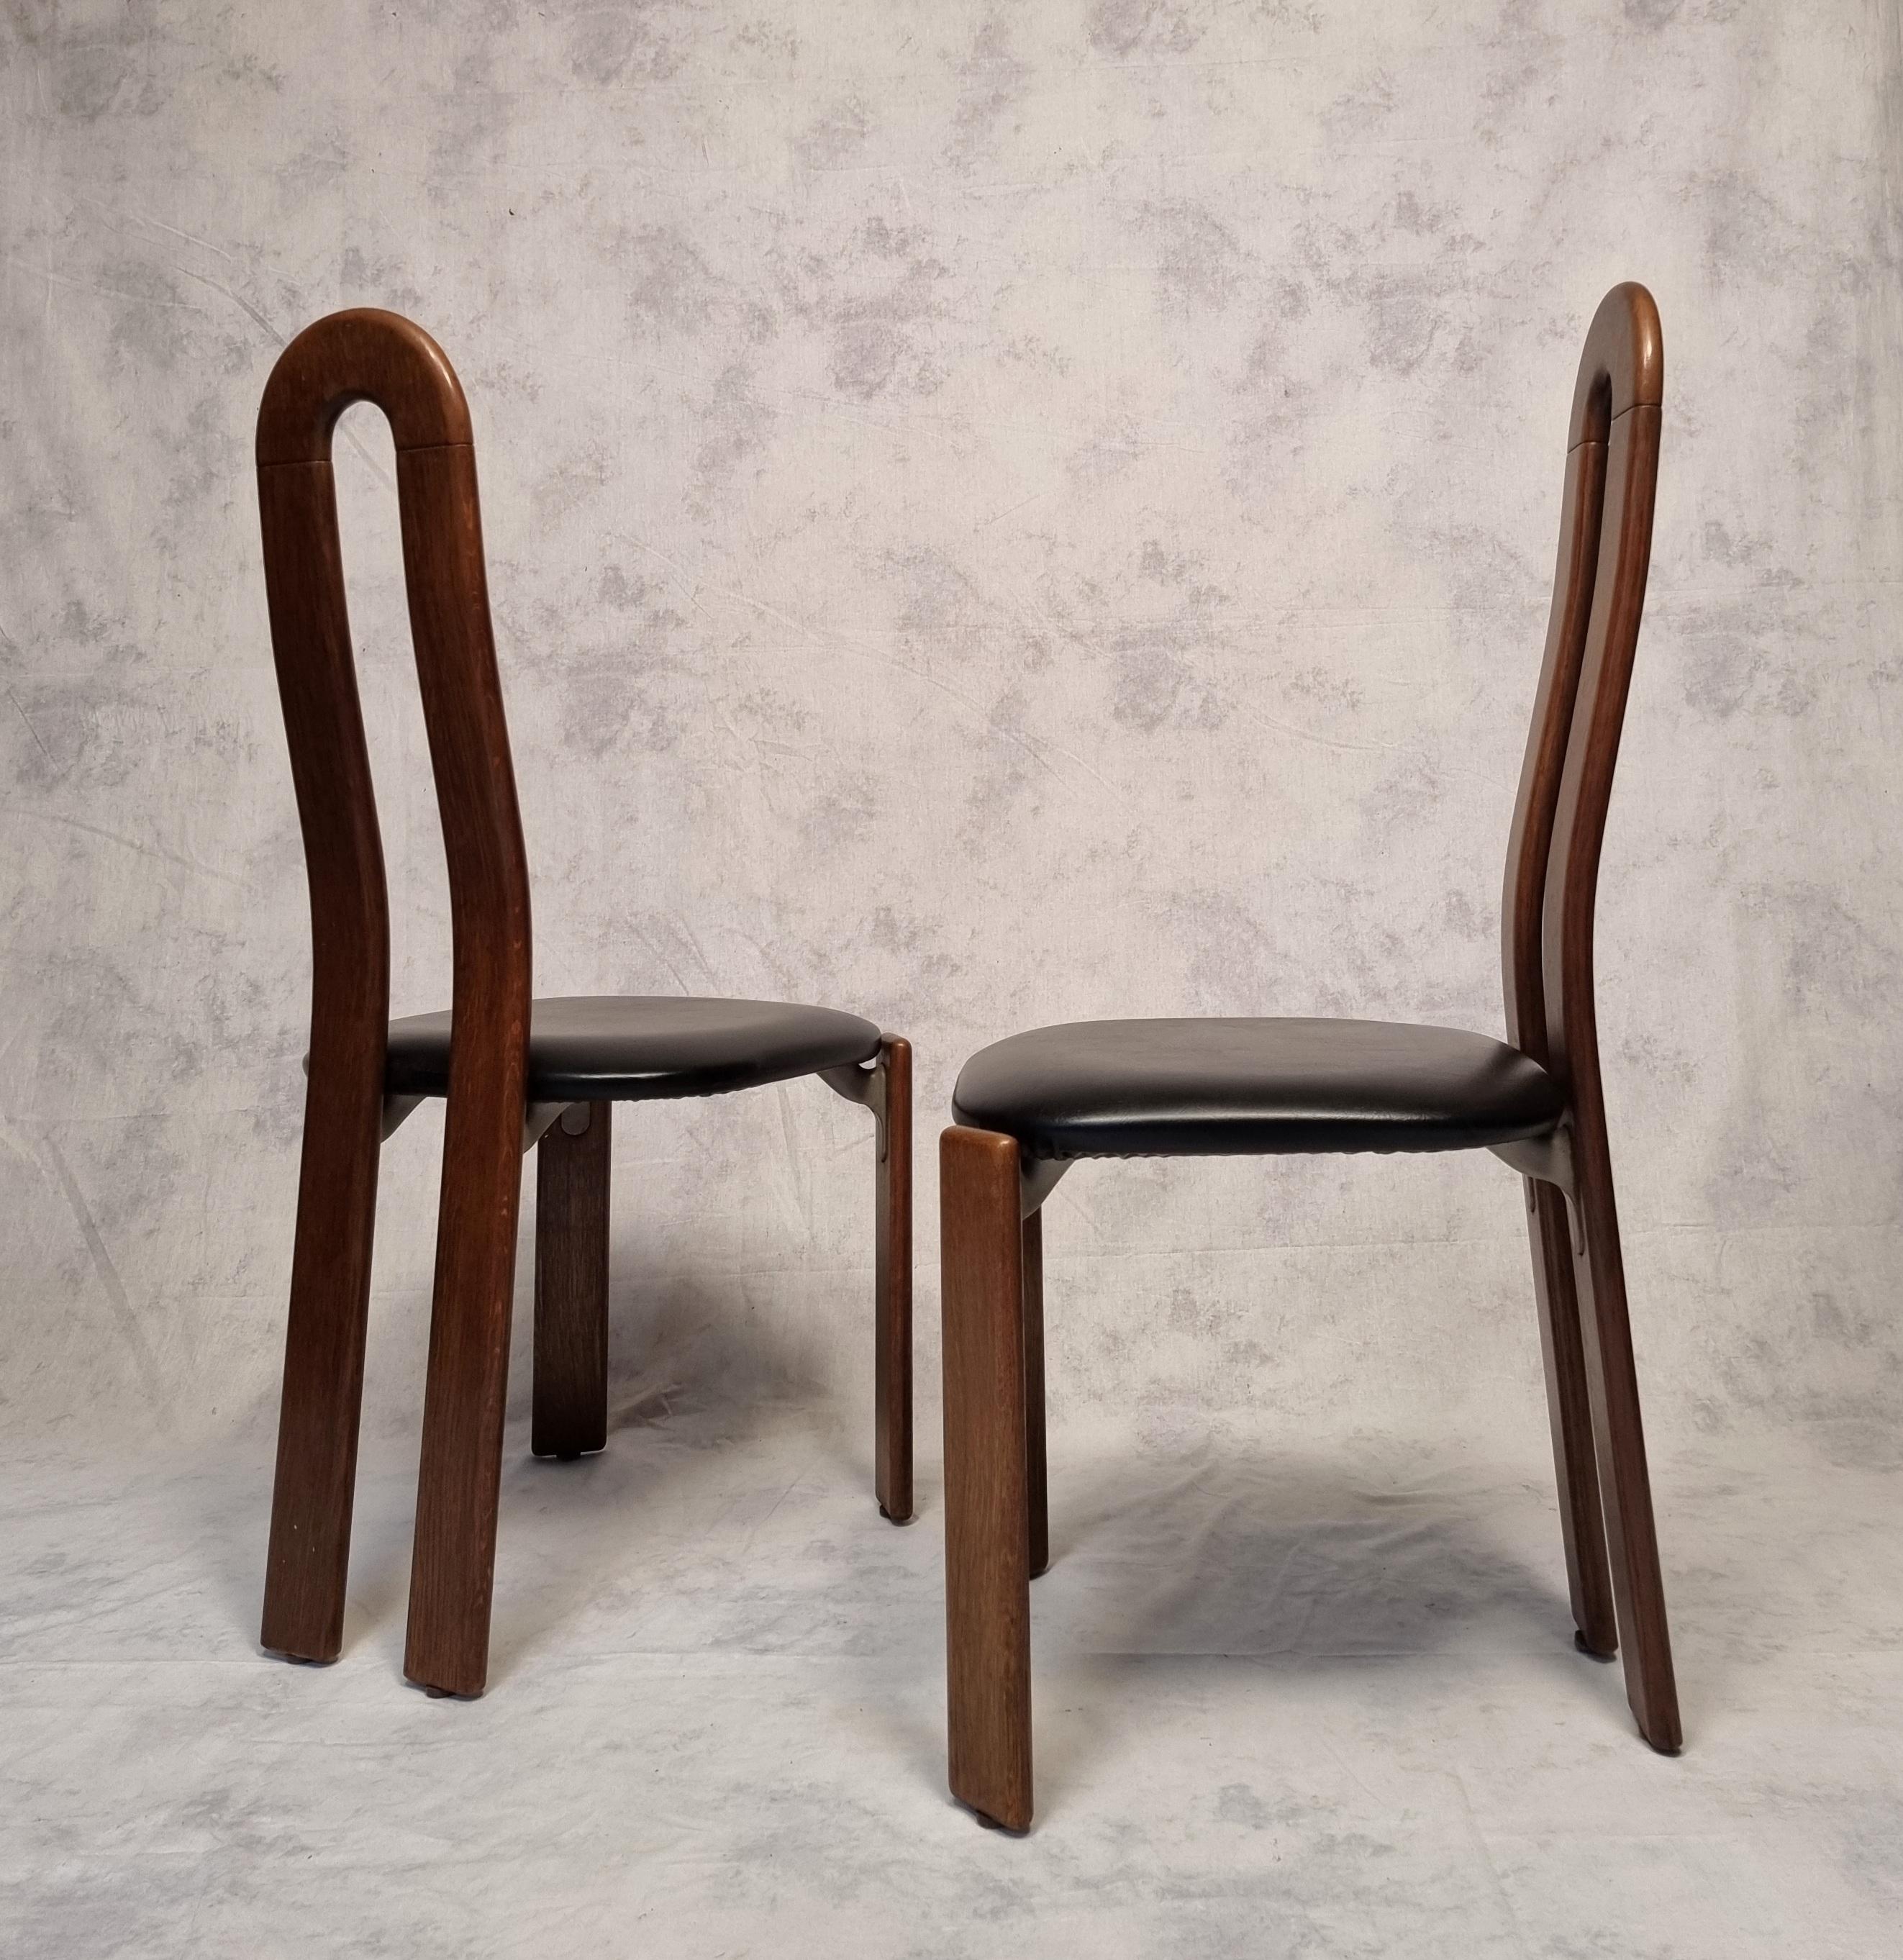 Swiss Bruno Rey Chairs for Dietiker by Atelier Stuhl Aus Stein Am Rhein, Oak, Ca 197 For Sale